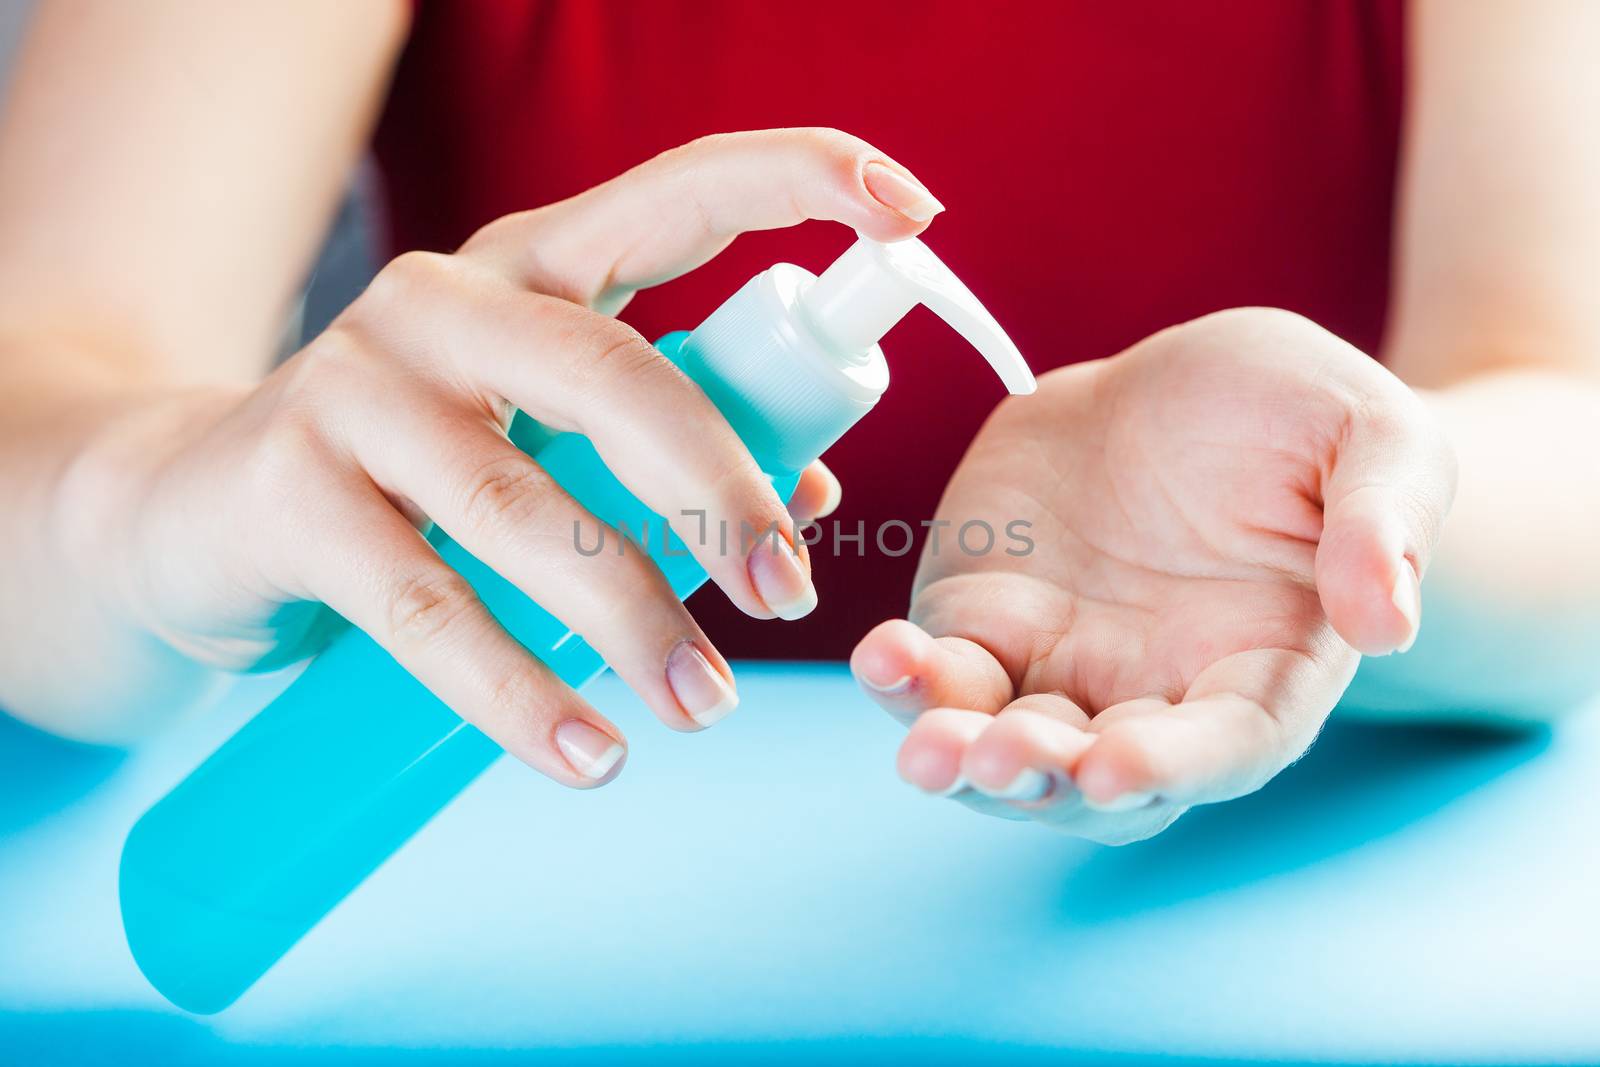 Caucasian woman applying dry hand wash sanitizer gel by Plyushkin